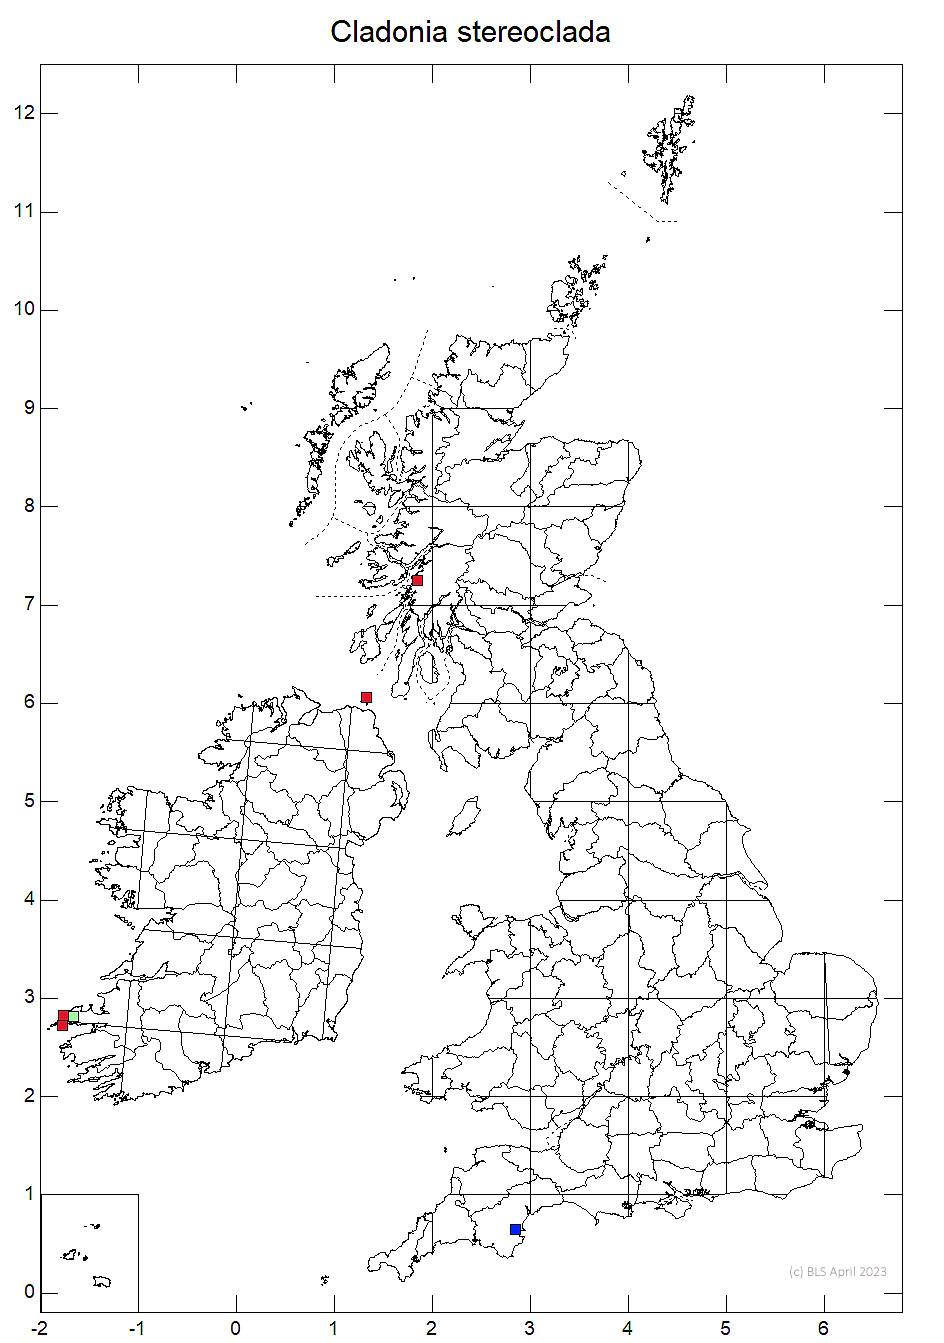 Cladonia stereoclada 10km sq distribution map